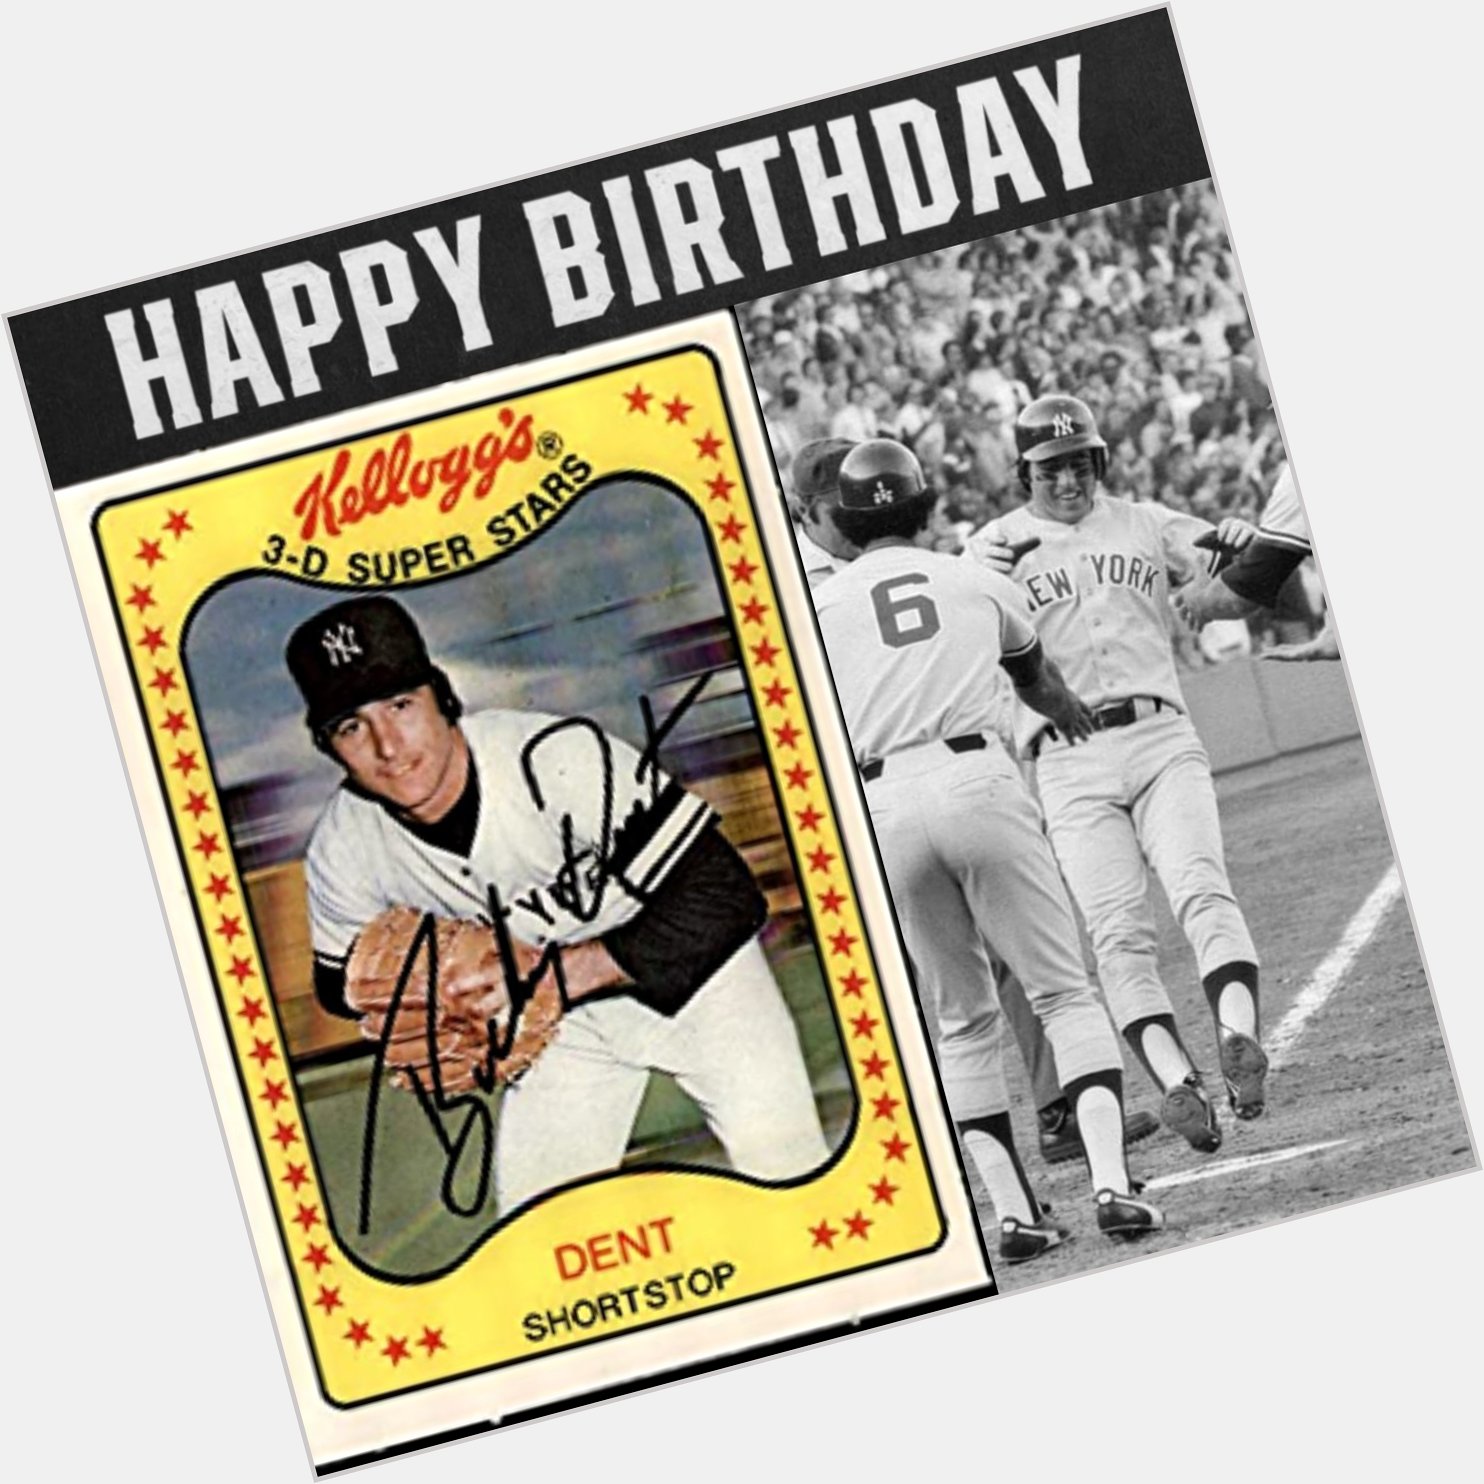 Happy Birthday All-Star, World Series MVP, legendary home run hitter Bucky Dent! Love you always.  